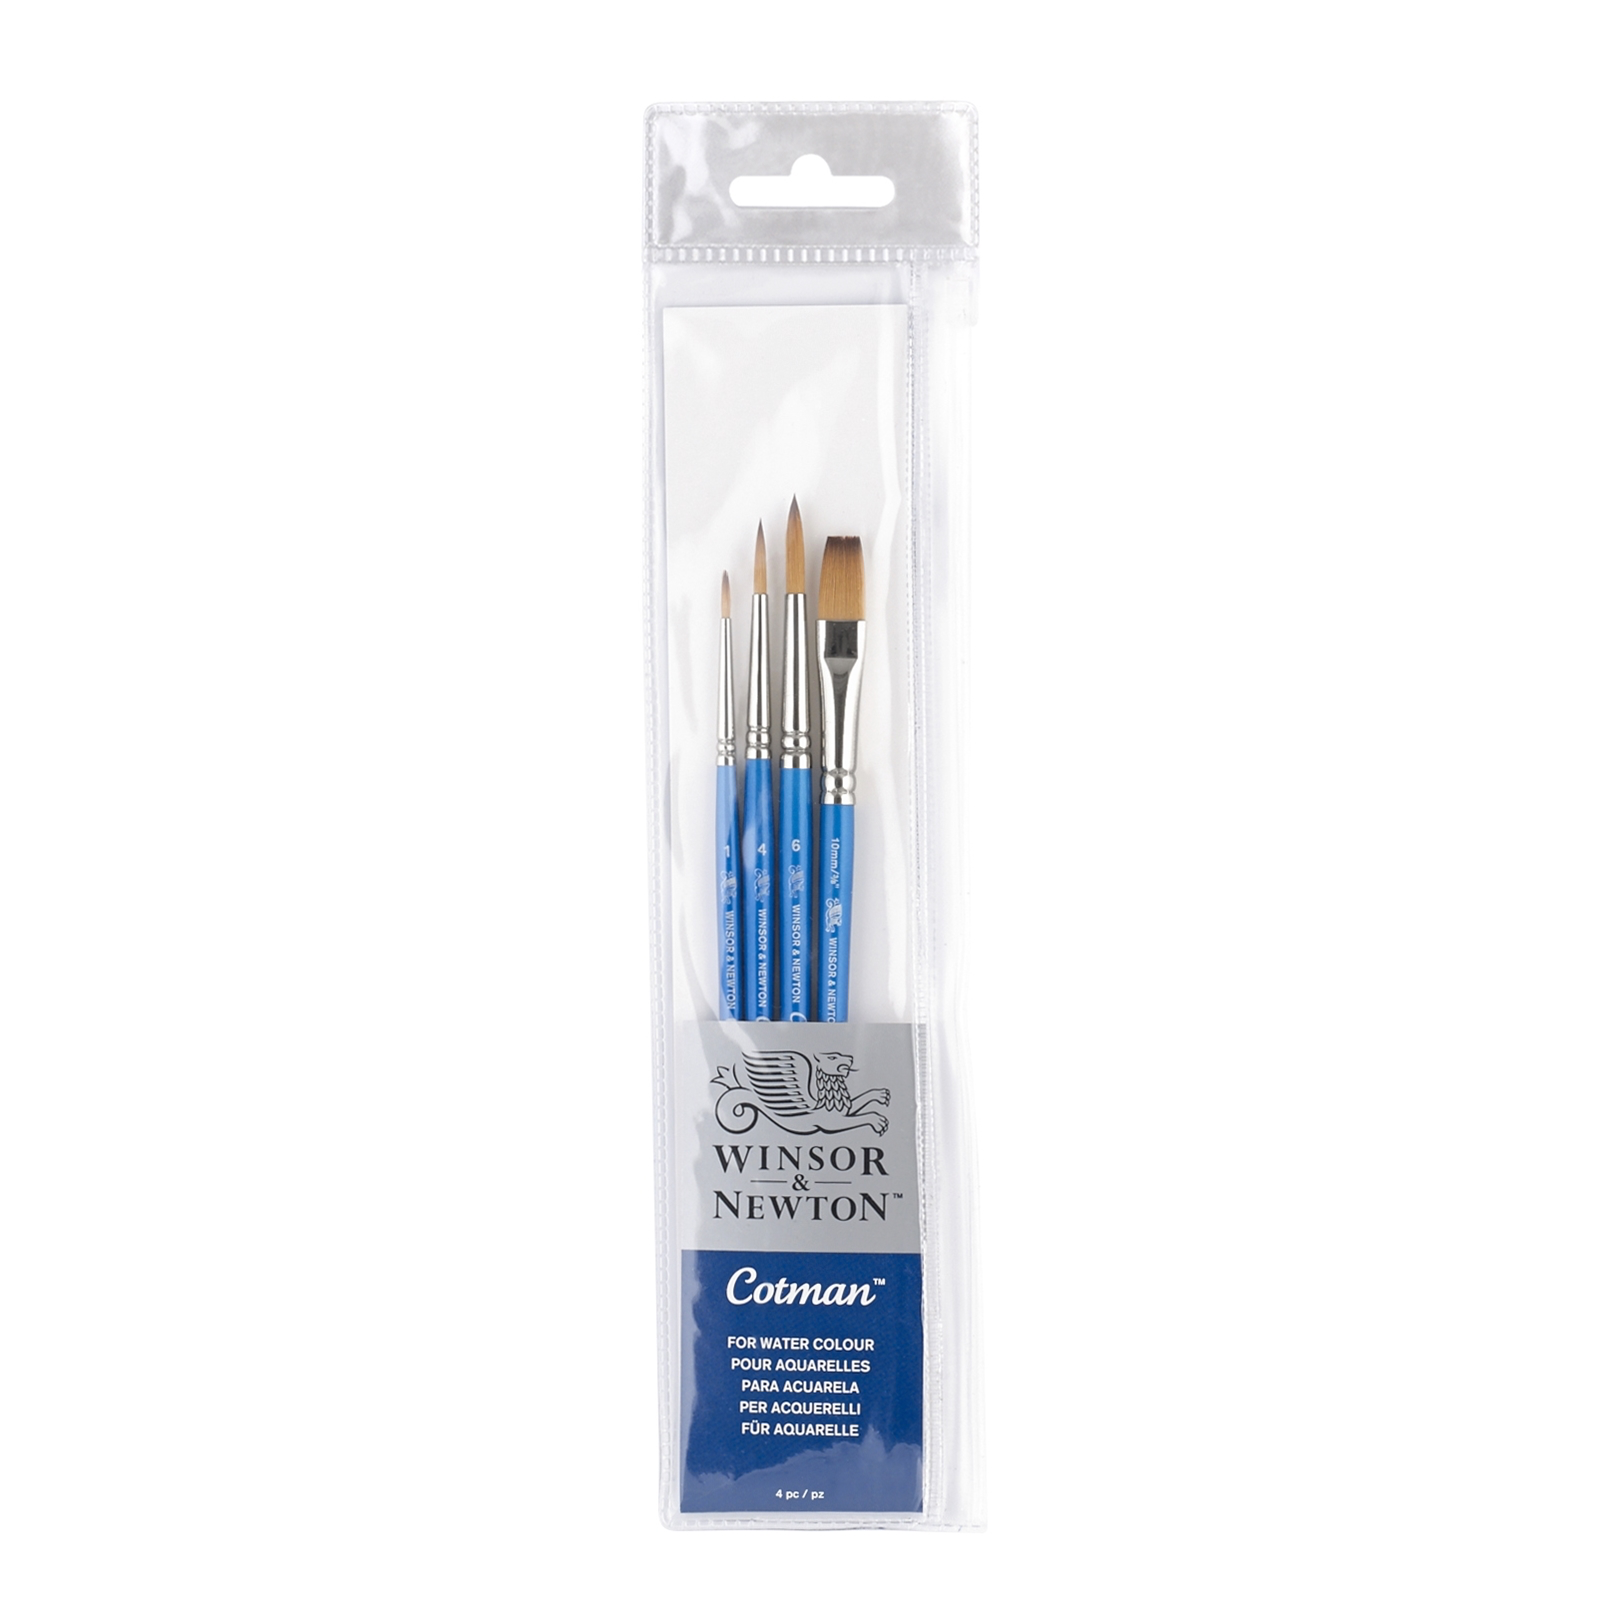 Watercolour brush care: How to clean & repair brushes - Emily